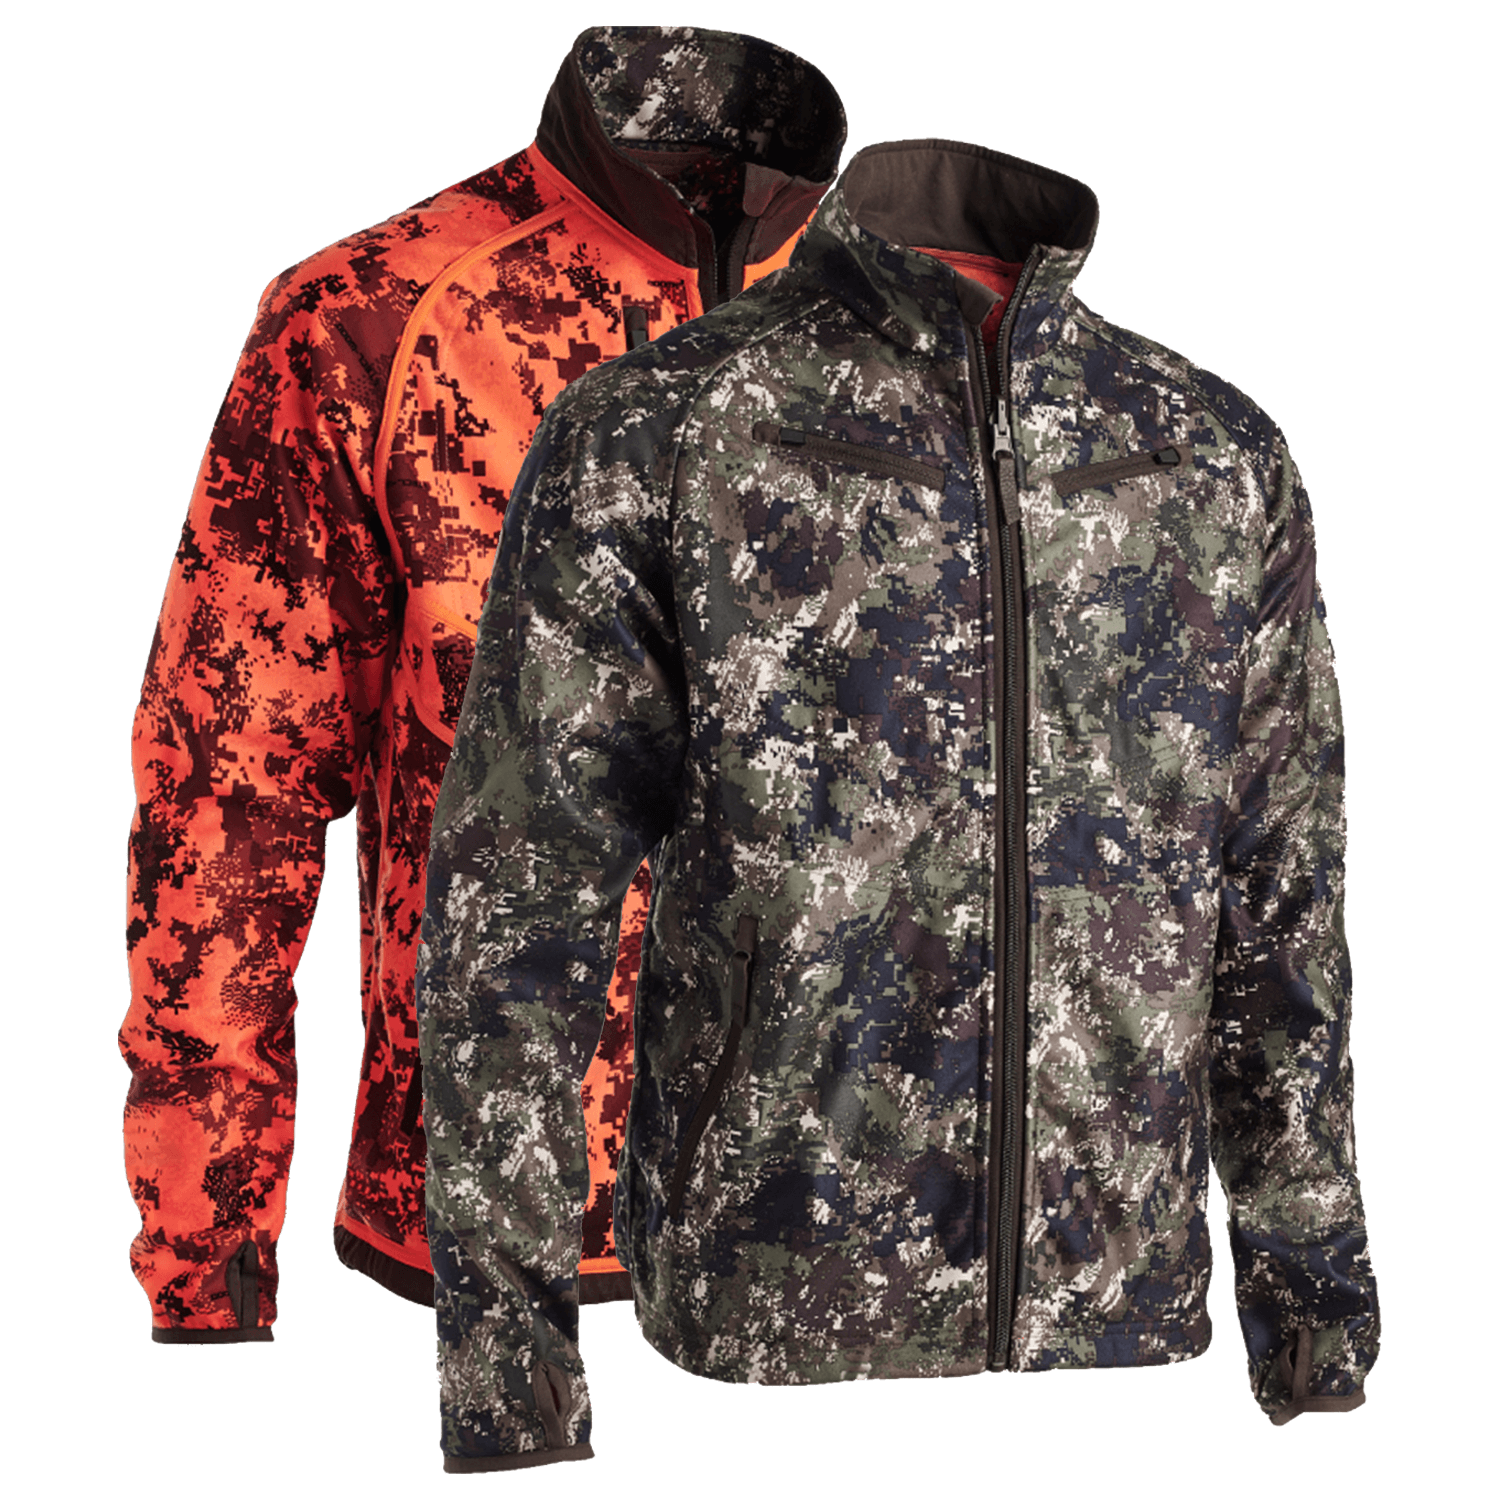 Northern Hunting Roar Rev. Jacket - Camouflage Jackets